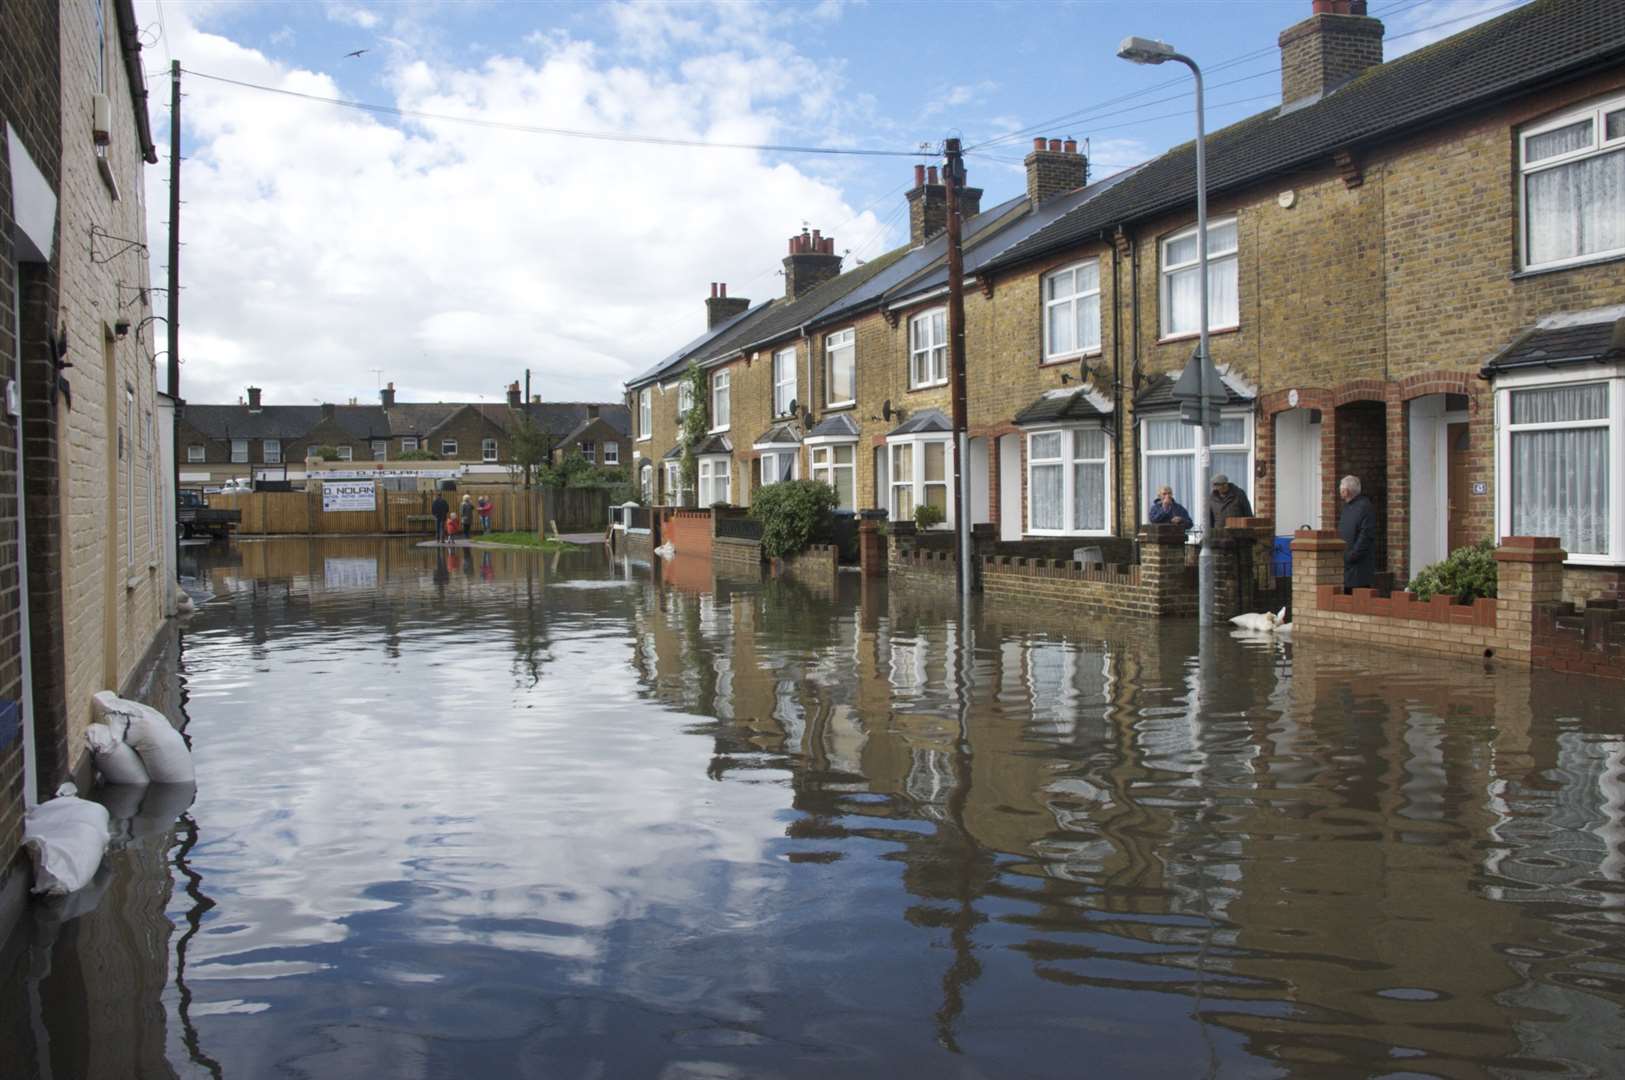 Albert Road flooding last year